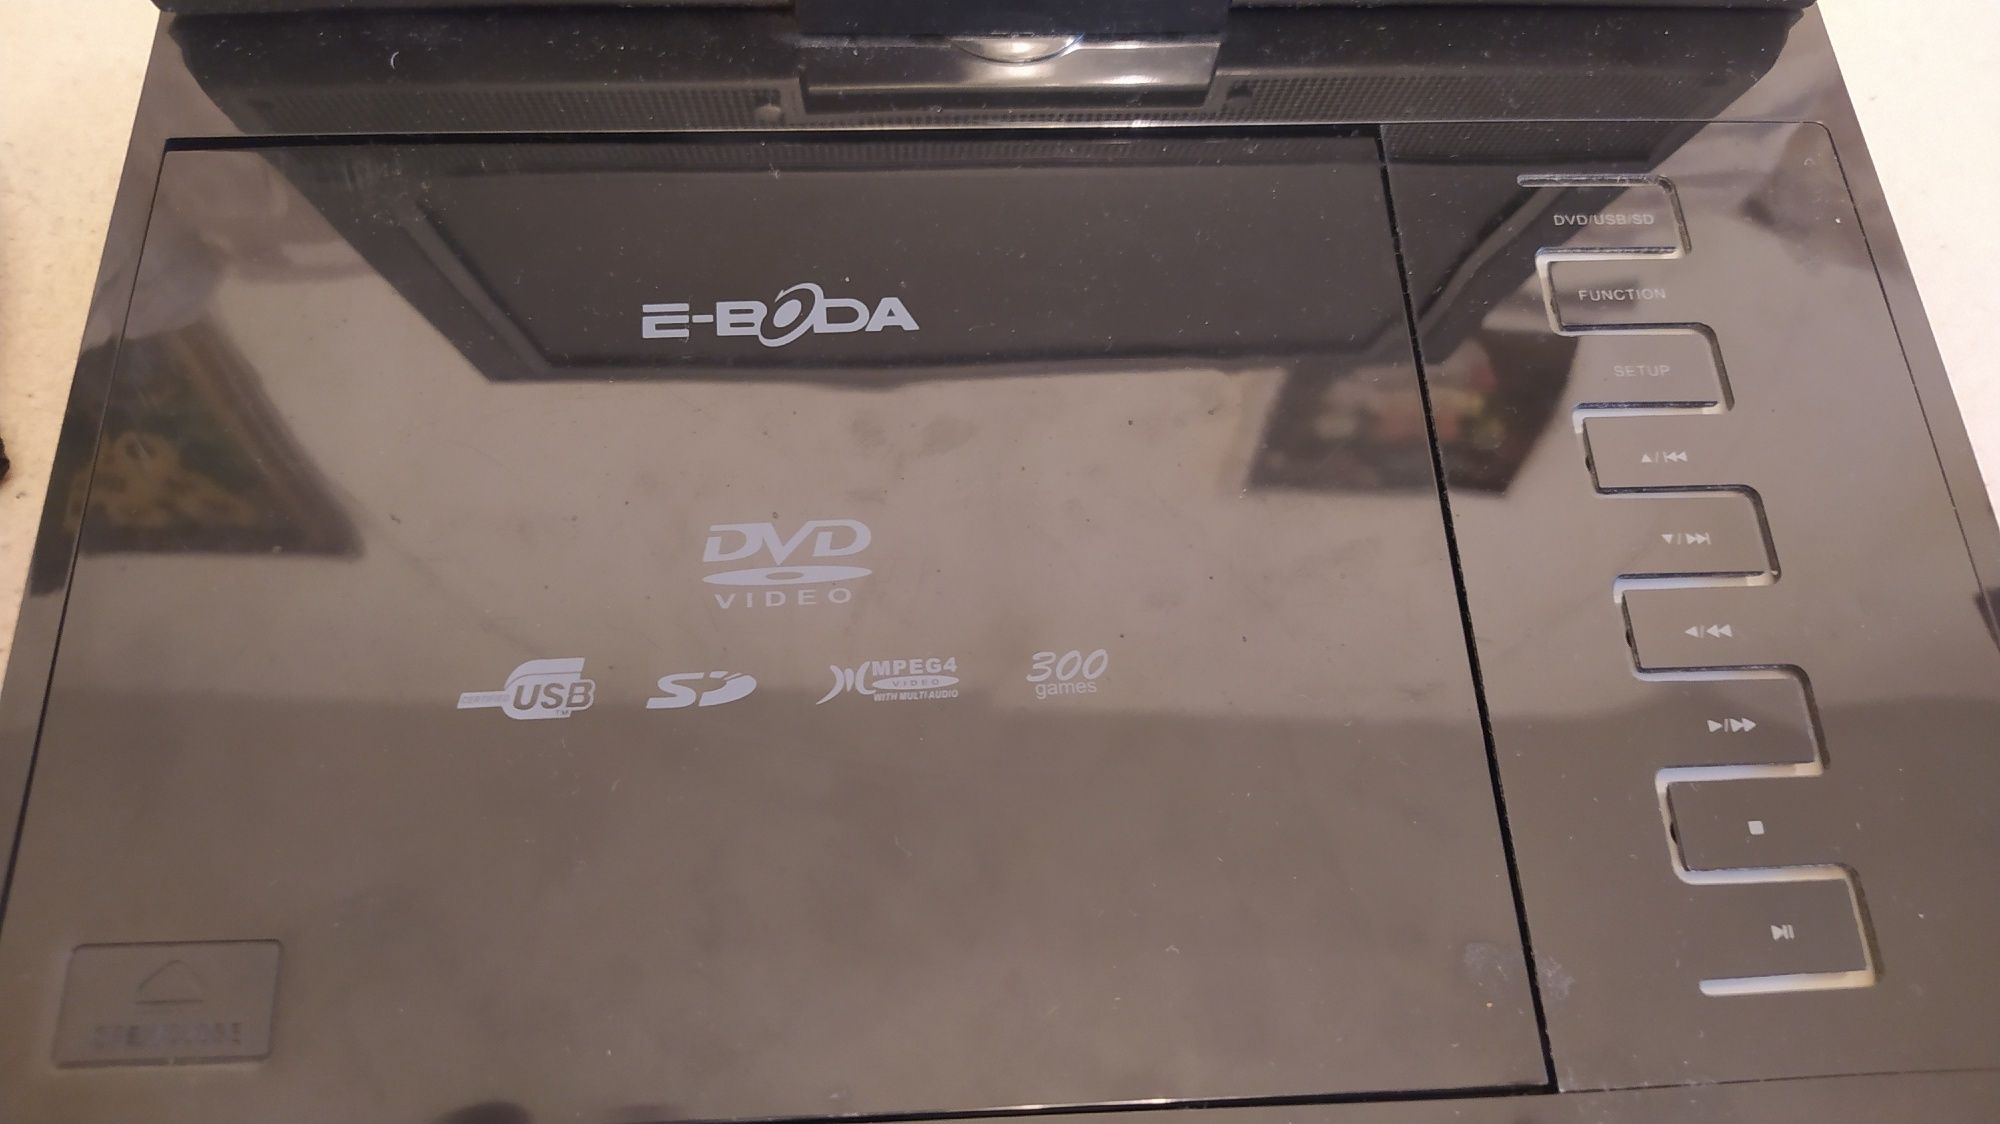 DVD portabil EBODA